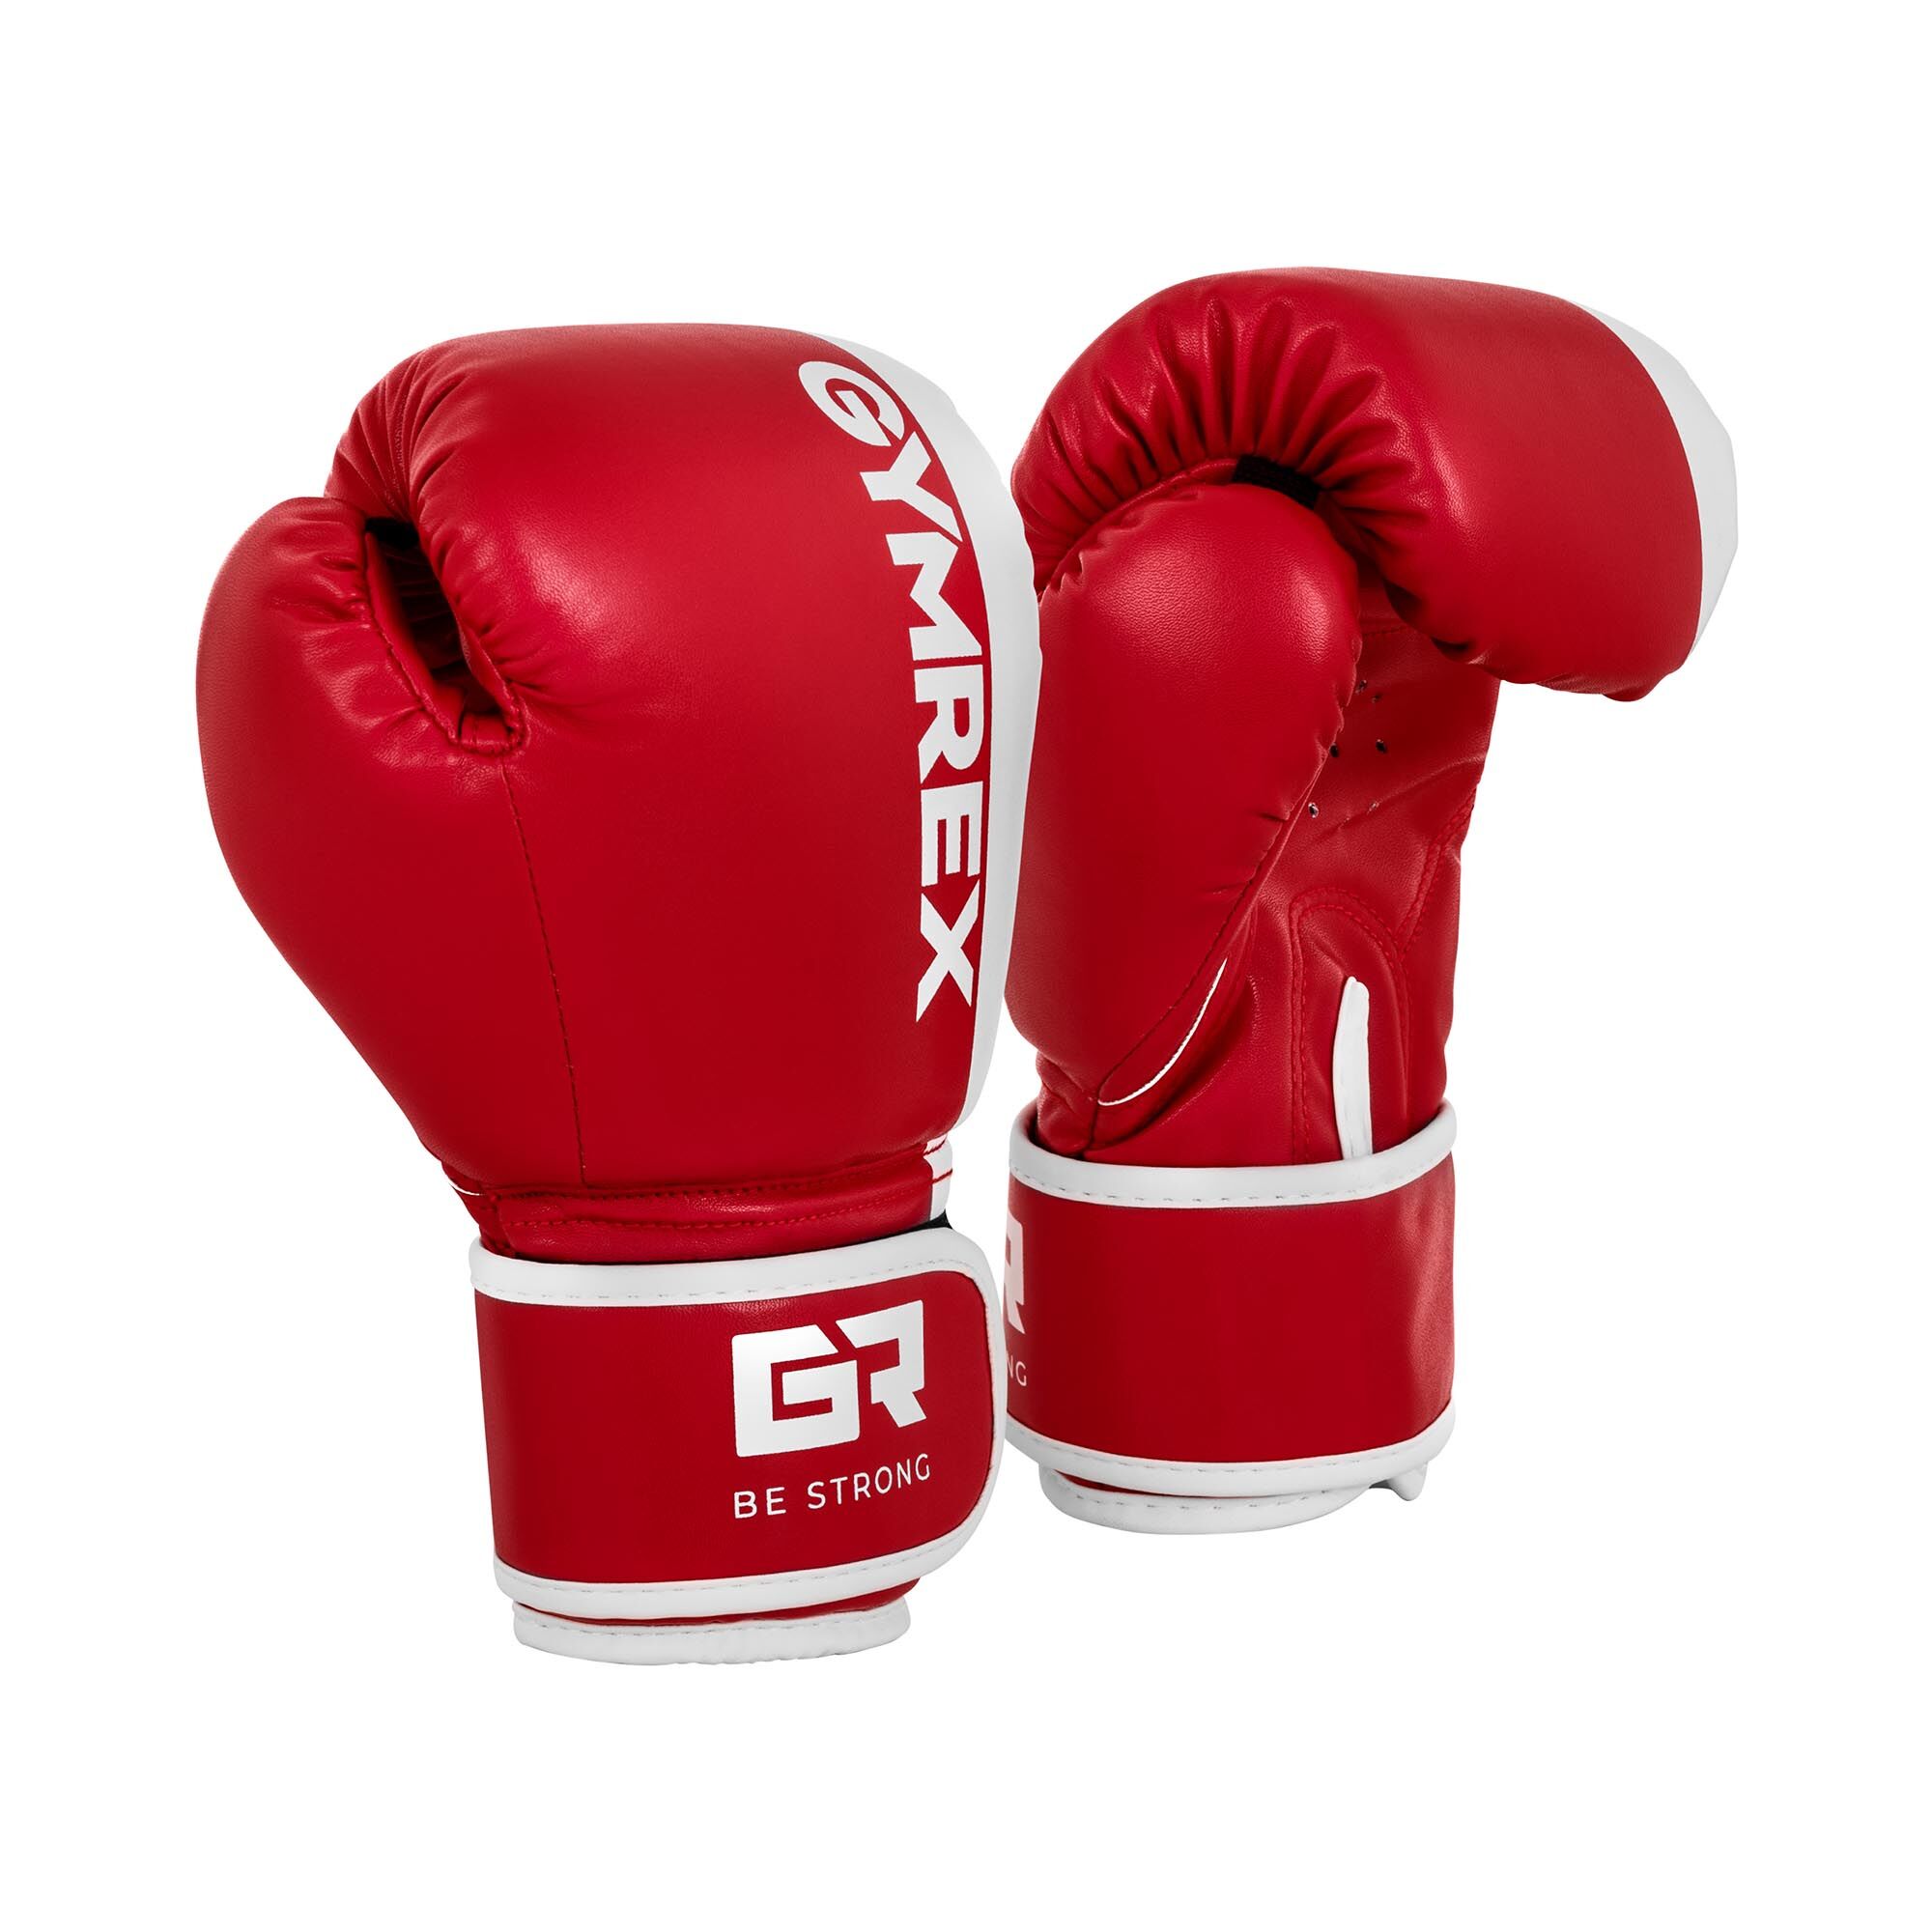 Gymrex Kids Boxing Gloves - 6 oz - red/white